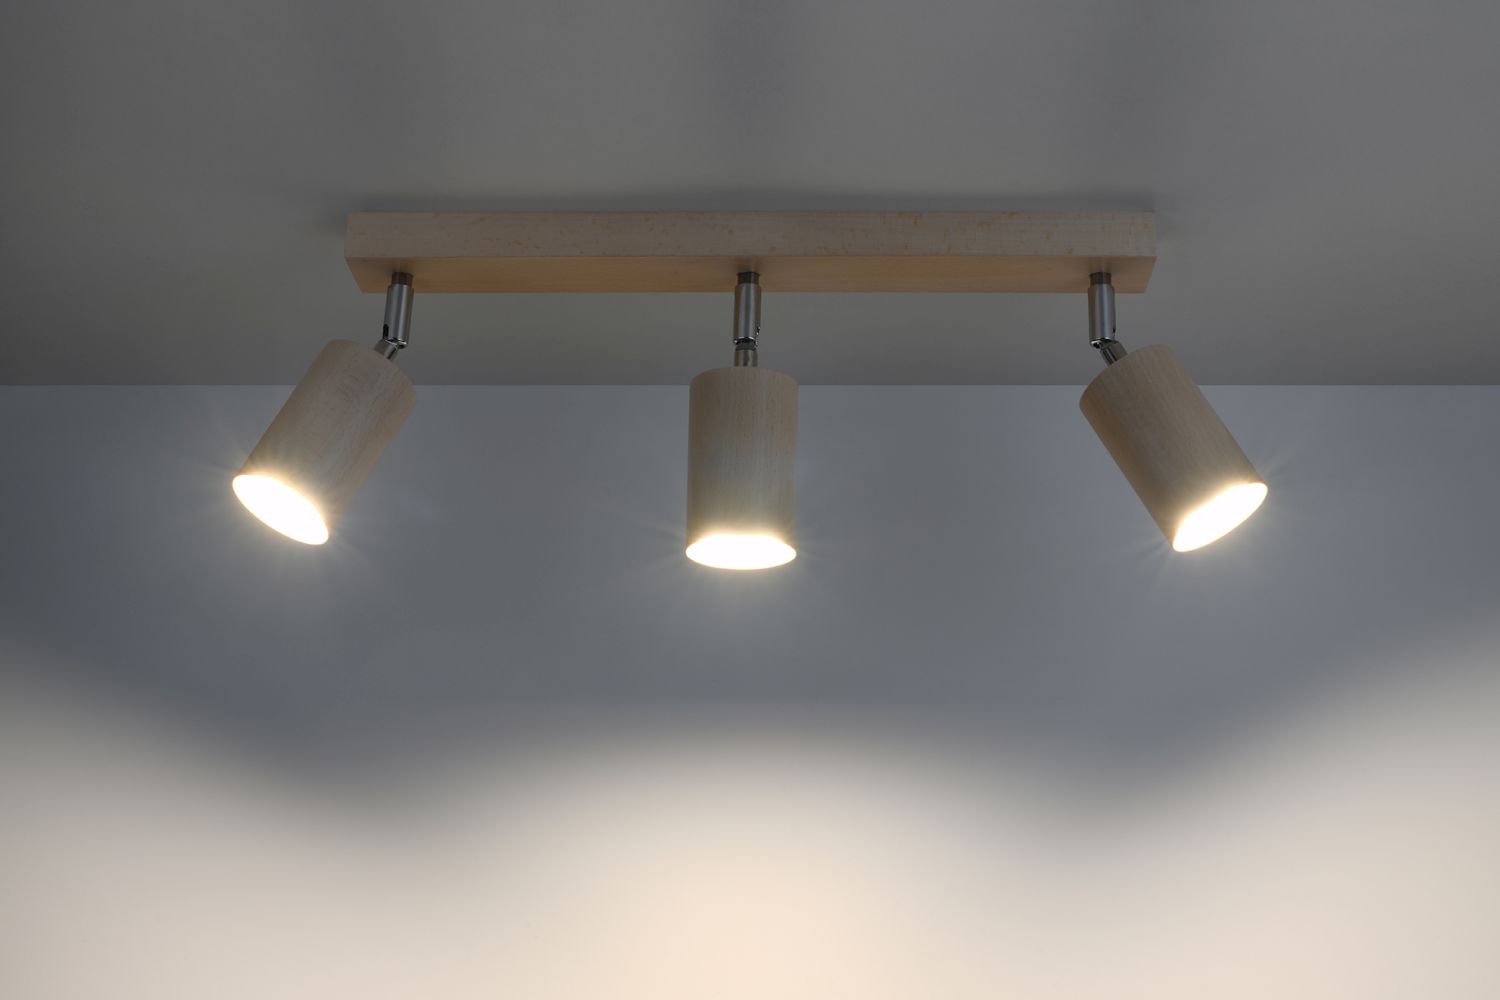 Deckenlampe Holz L:45cm 3x GU10 Strahler Spot Lampe